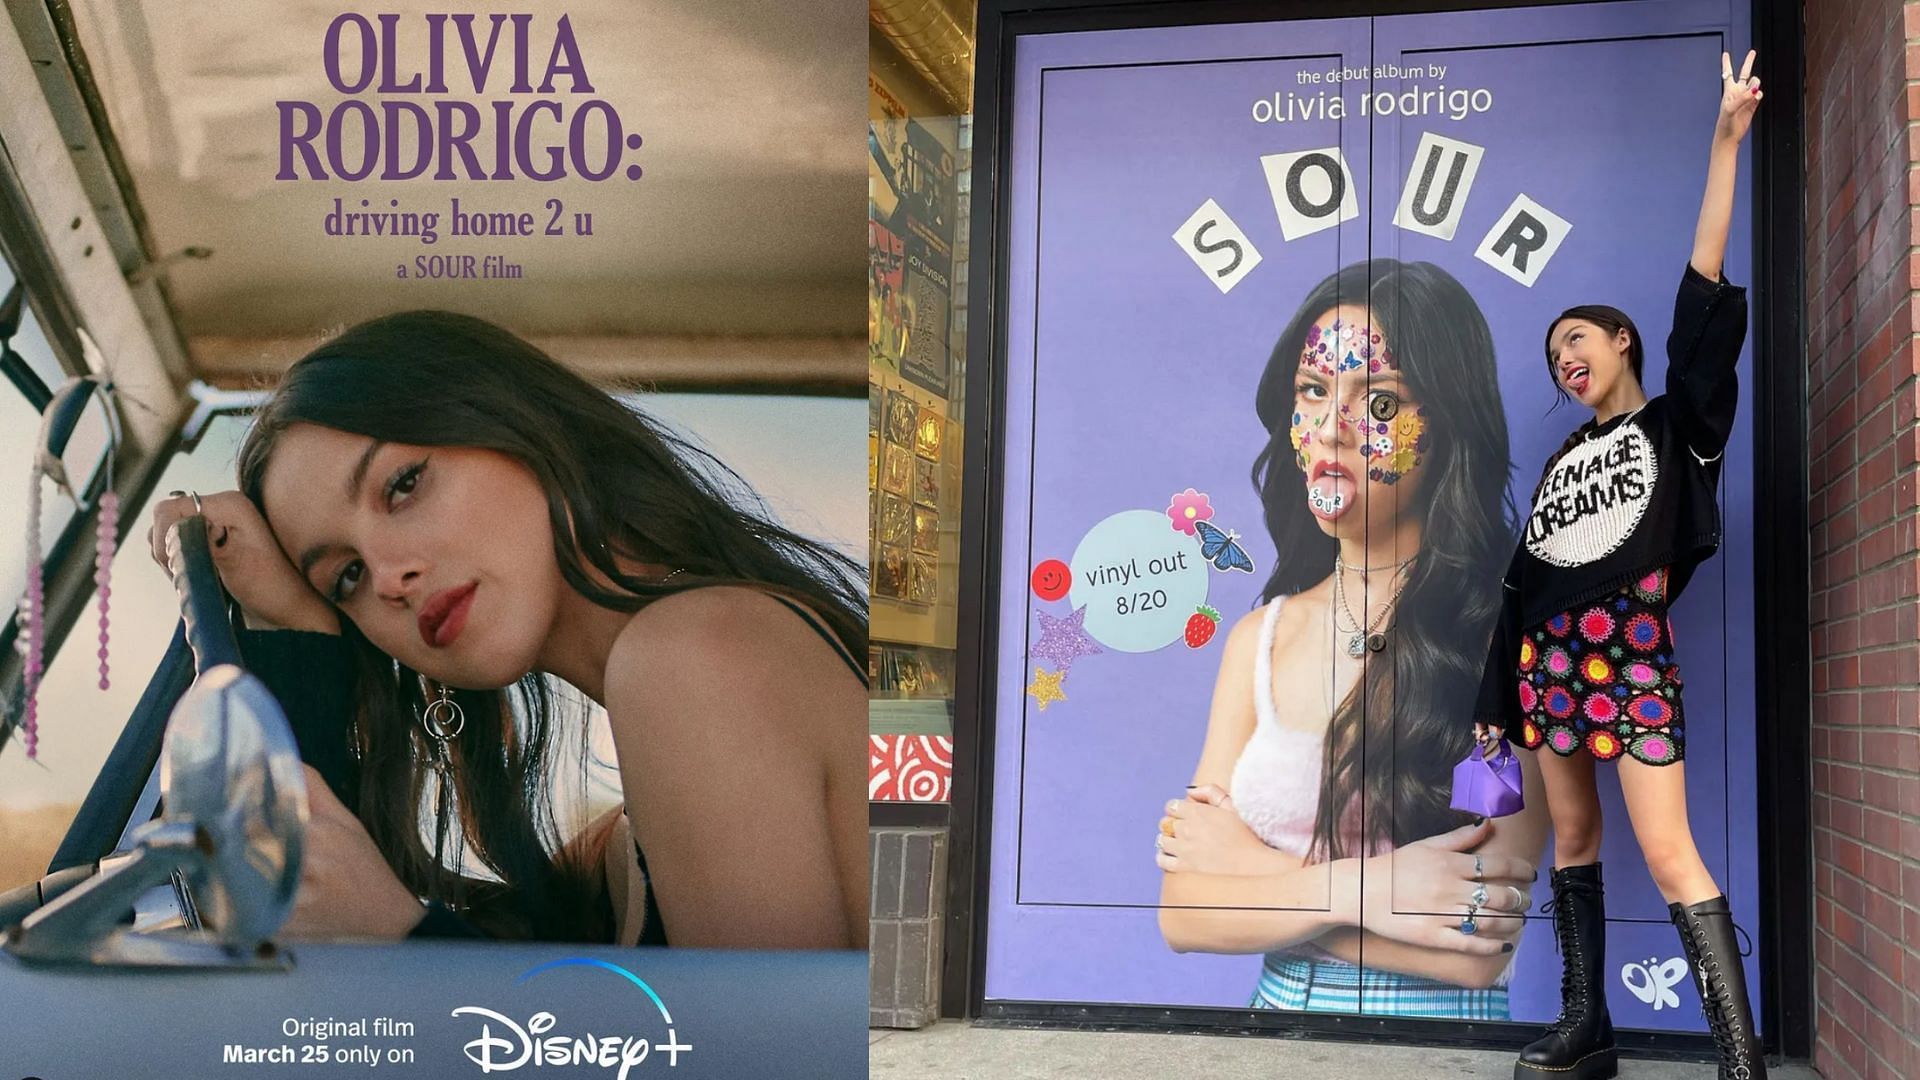 When will Olivia Rodrigo: driving home 2 u air on Disney+?